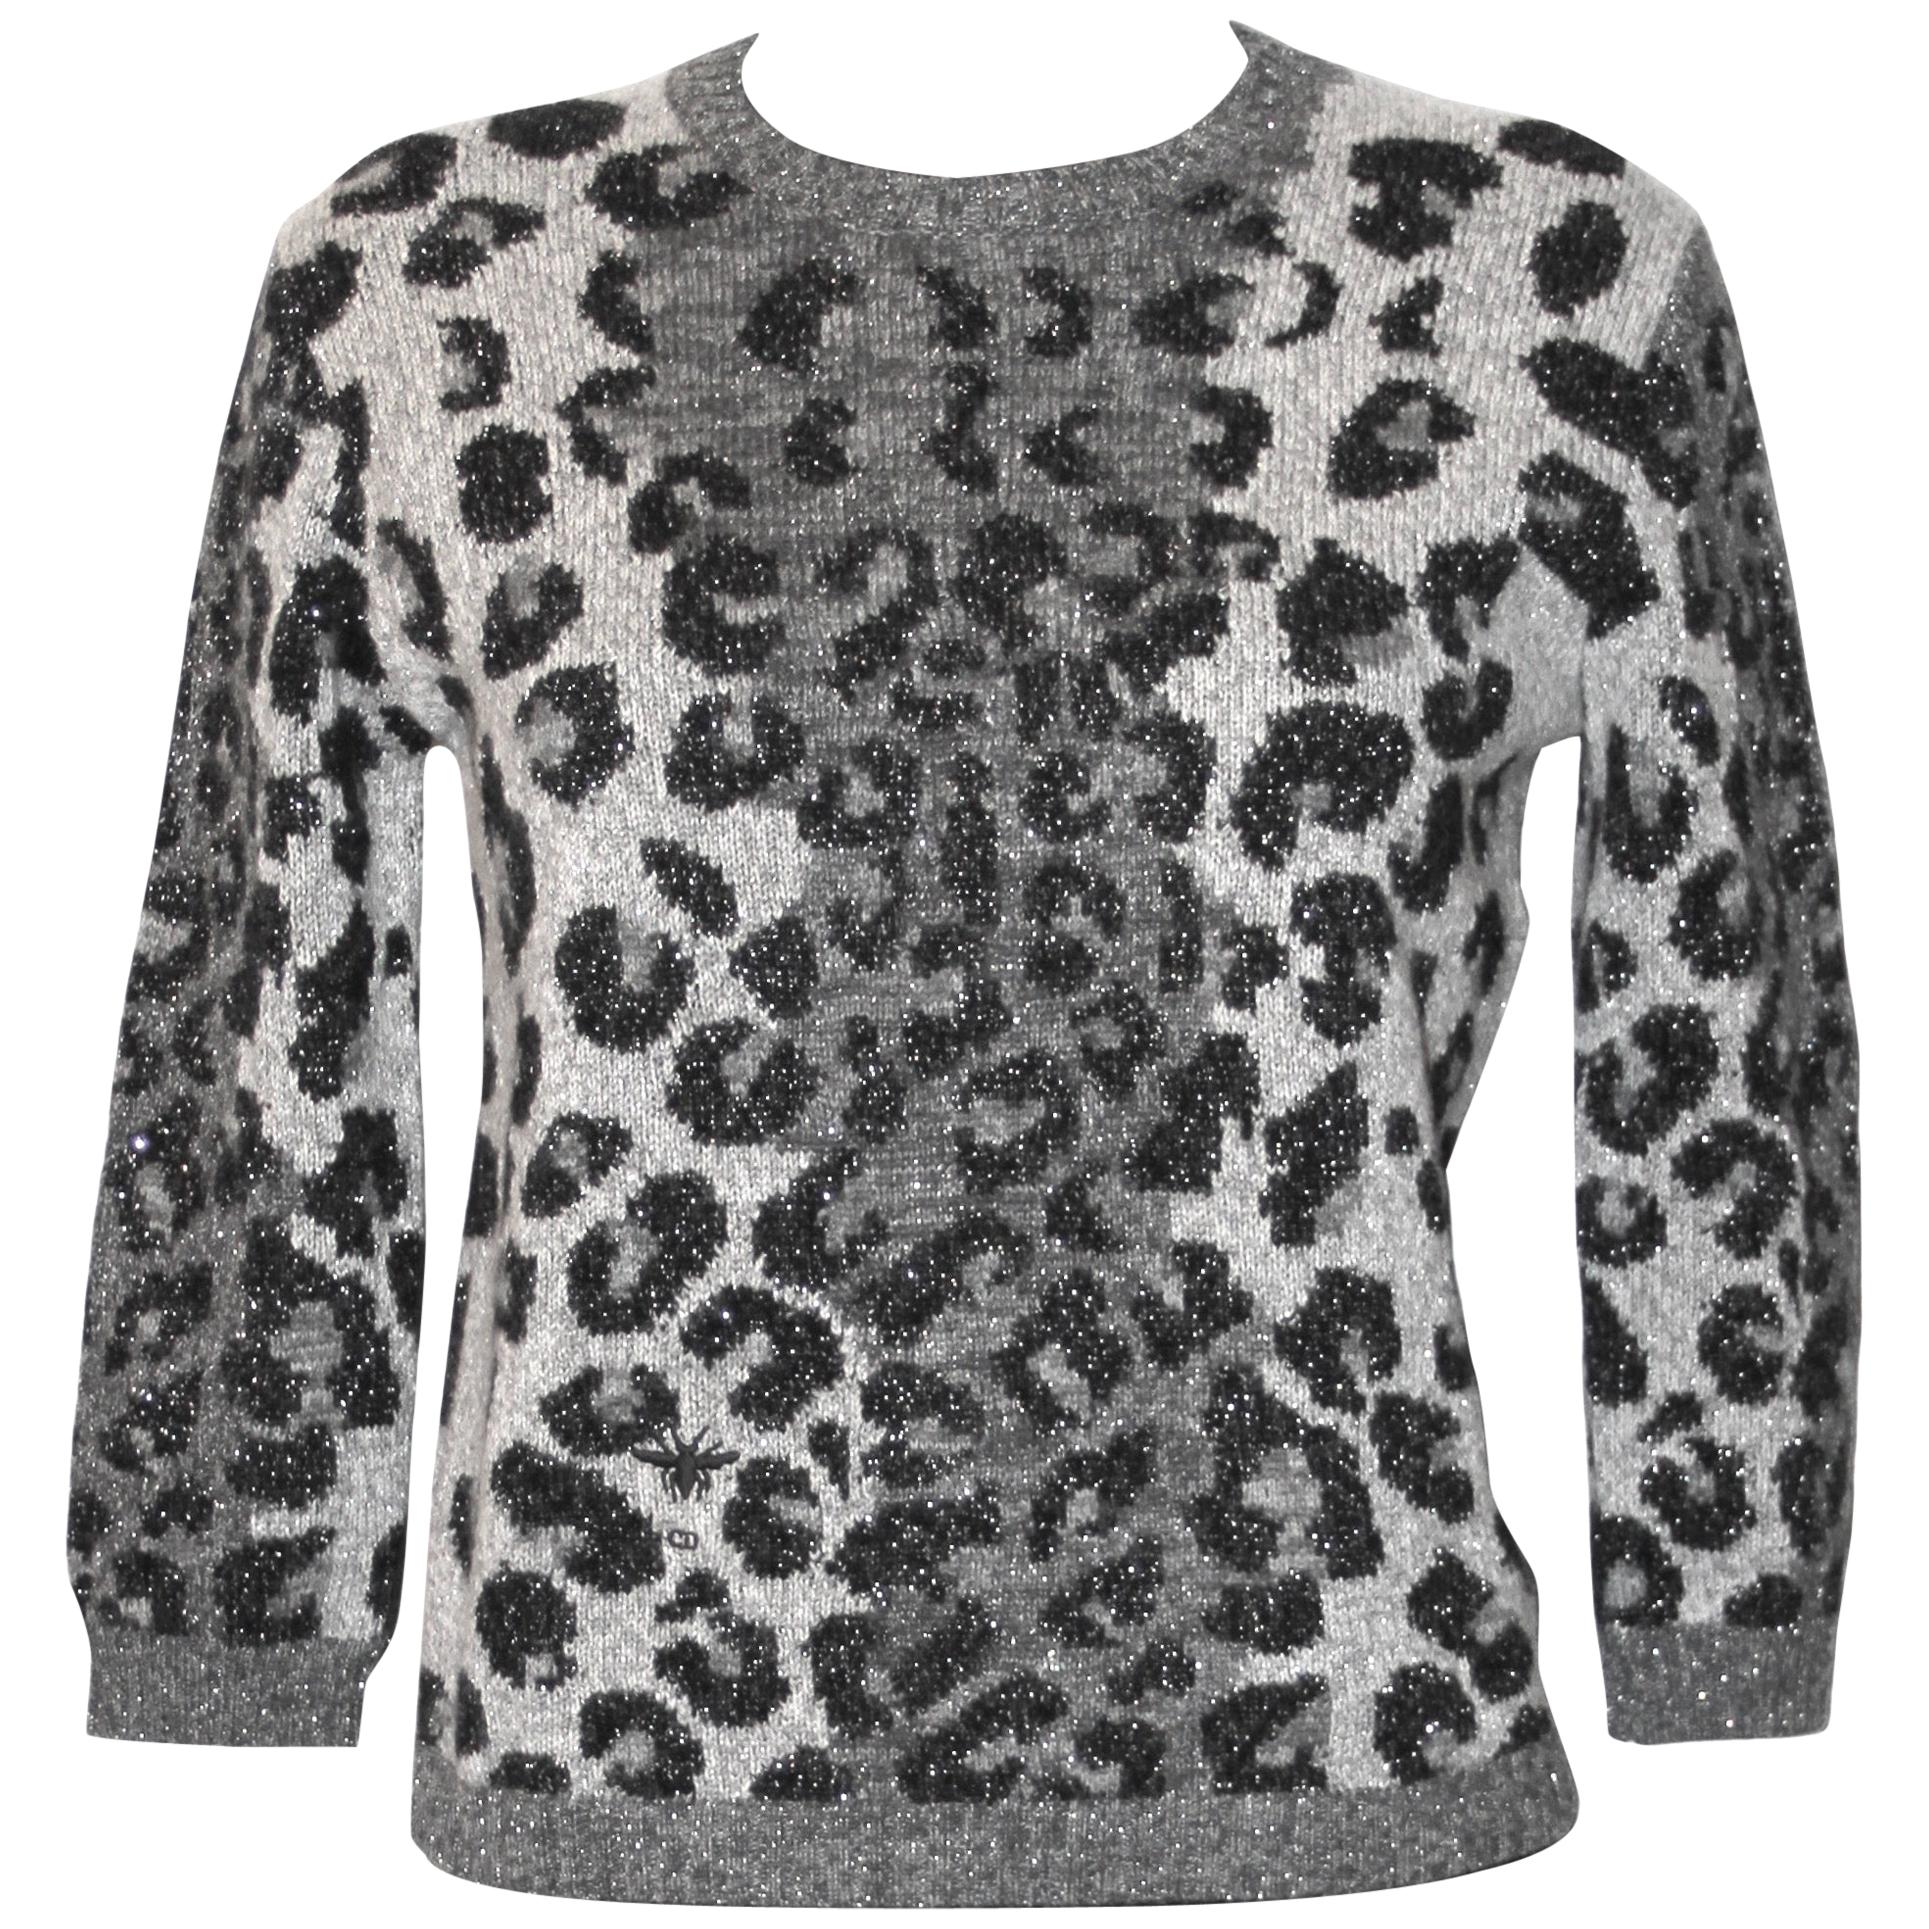 Christian Dior Grey Animal Print Sweater